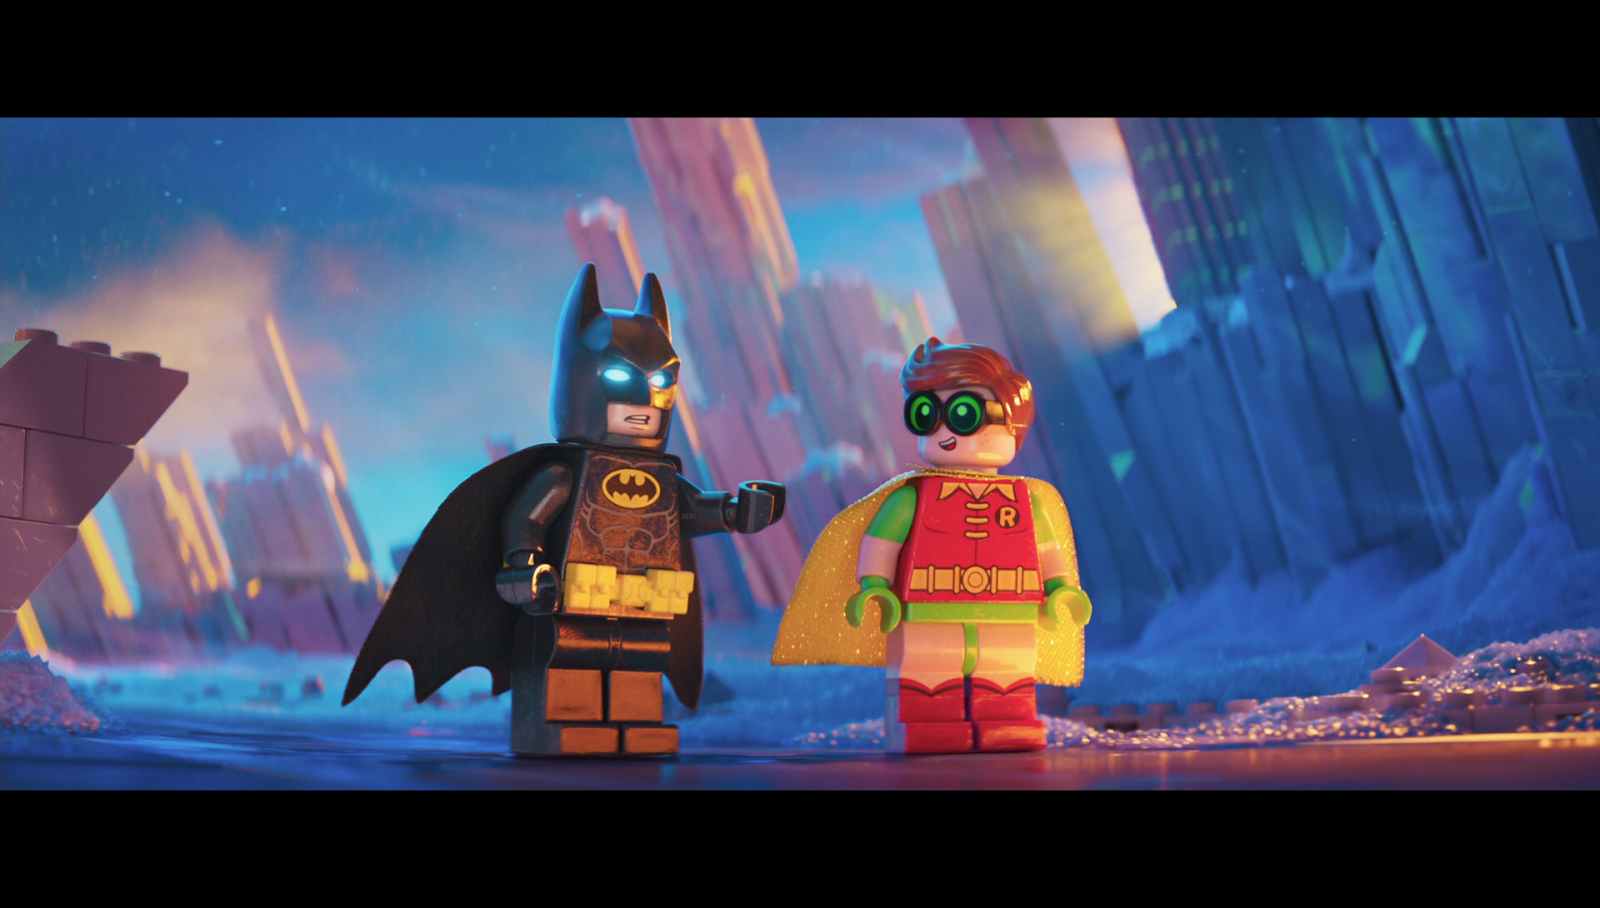 Superhero Slate, The LEGO Batman Movie